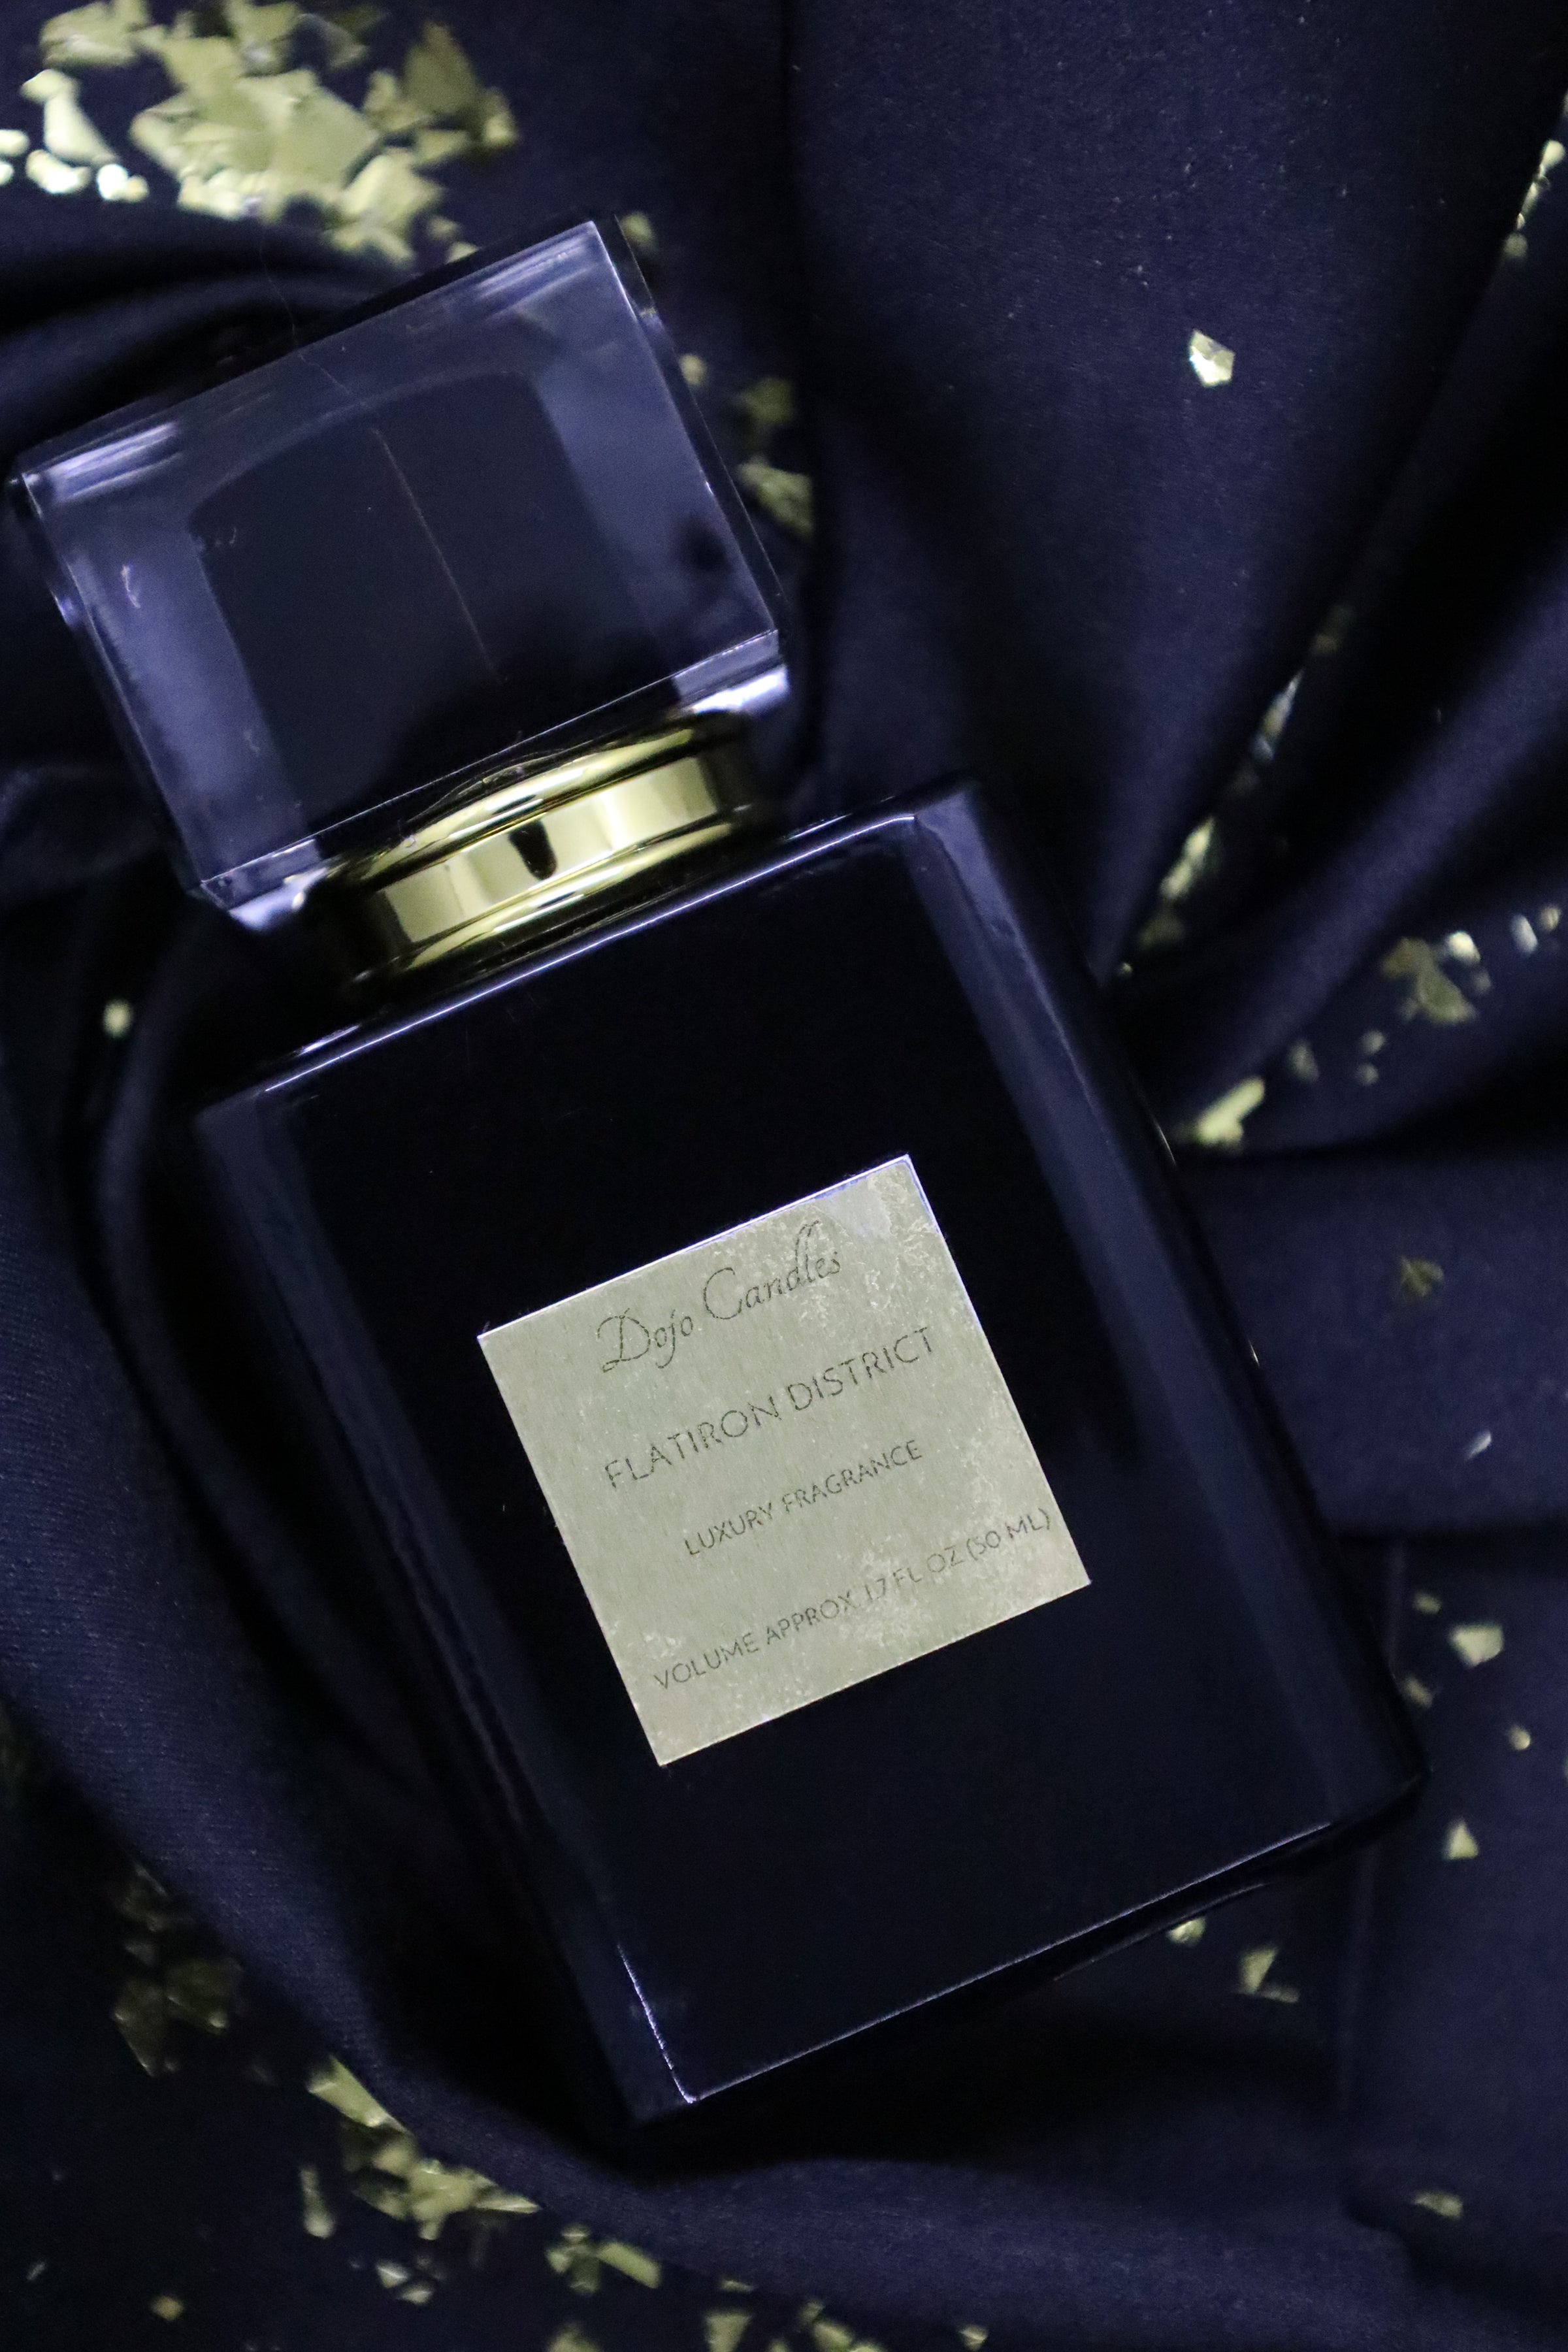 FlatIron District (Bibliotheque by Byredo inspired) Luxury Fragrance